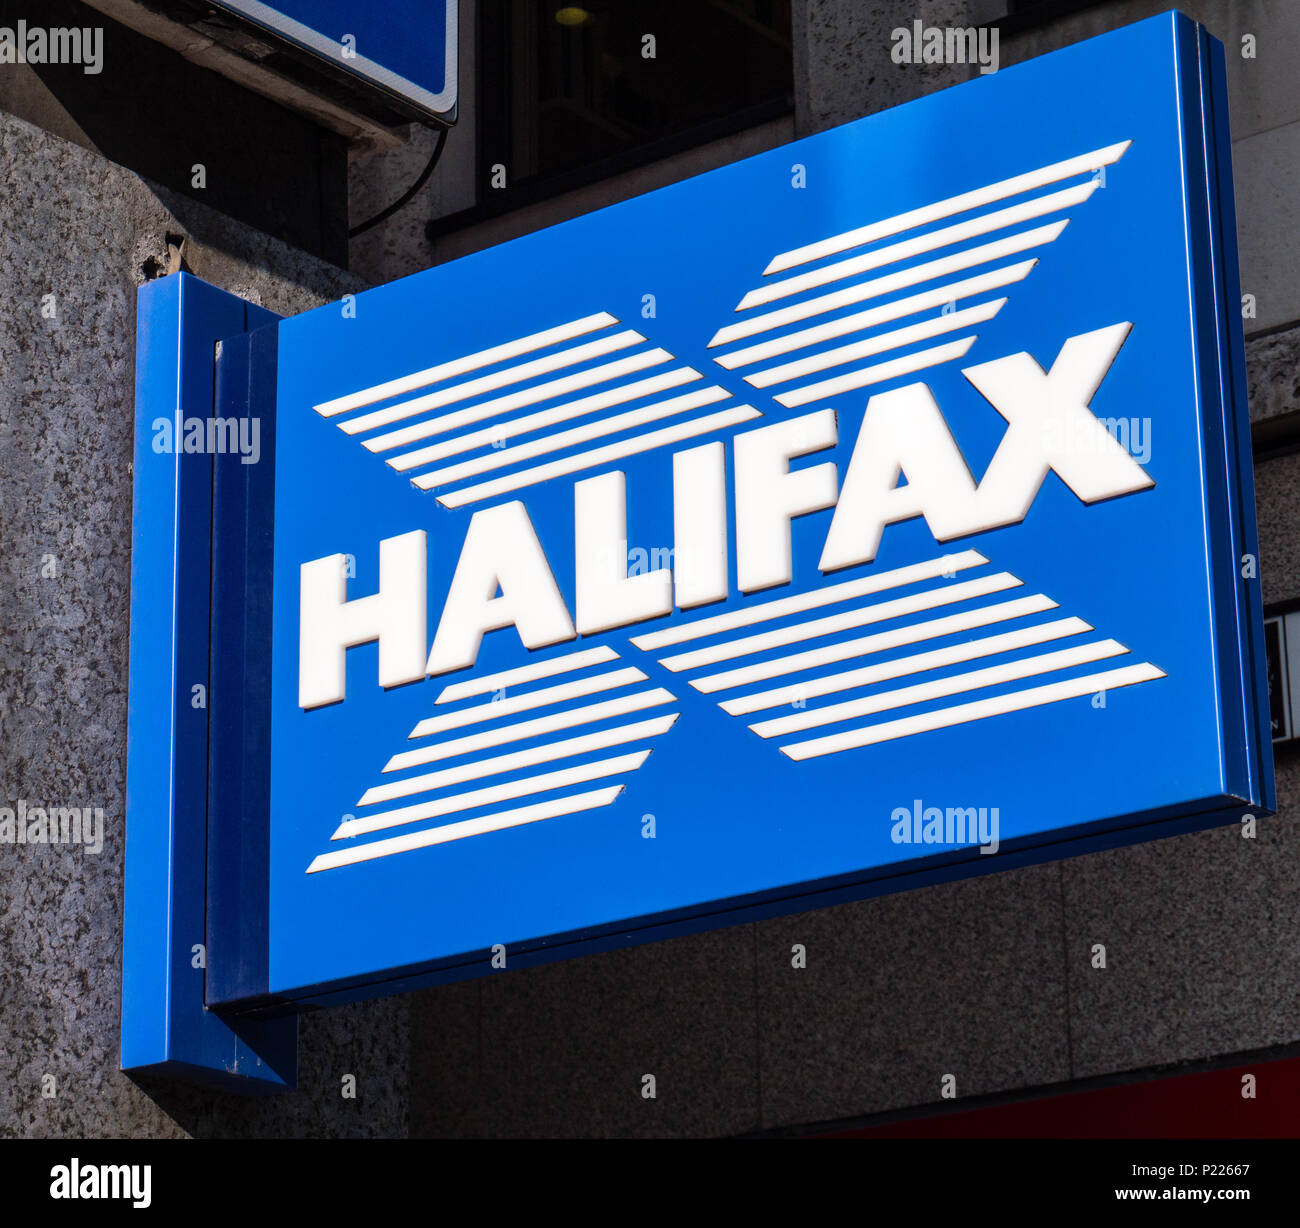 Halifax Sign, City of London, London, England, UK, GB. Stock Photo